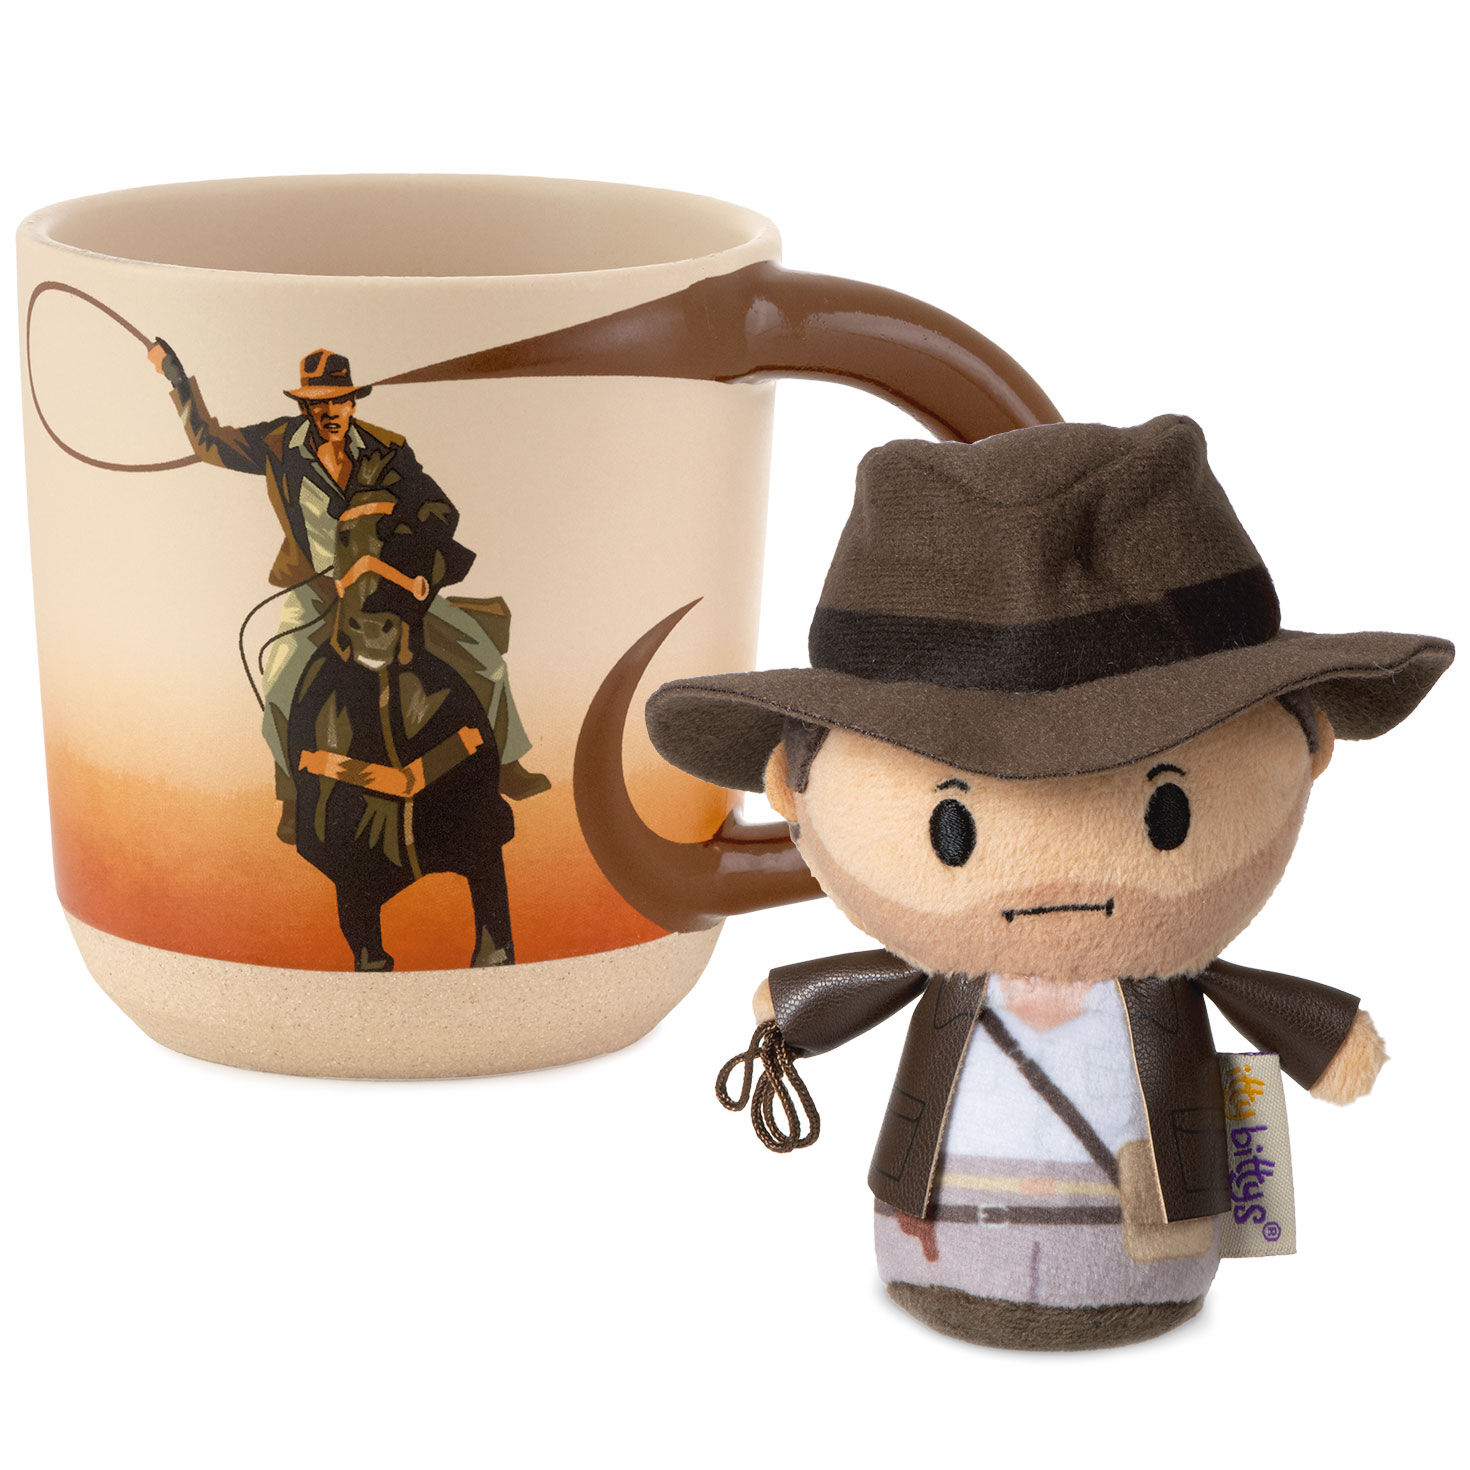 Indiana Jones™ Primed for Adventure Gift Set for only USD 9.99-19.99 | Hallmark